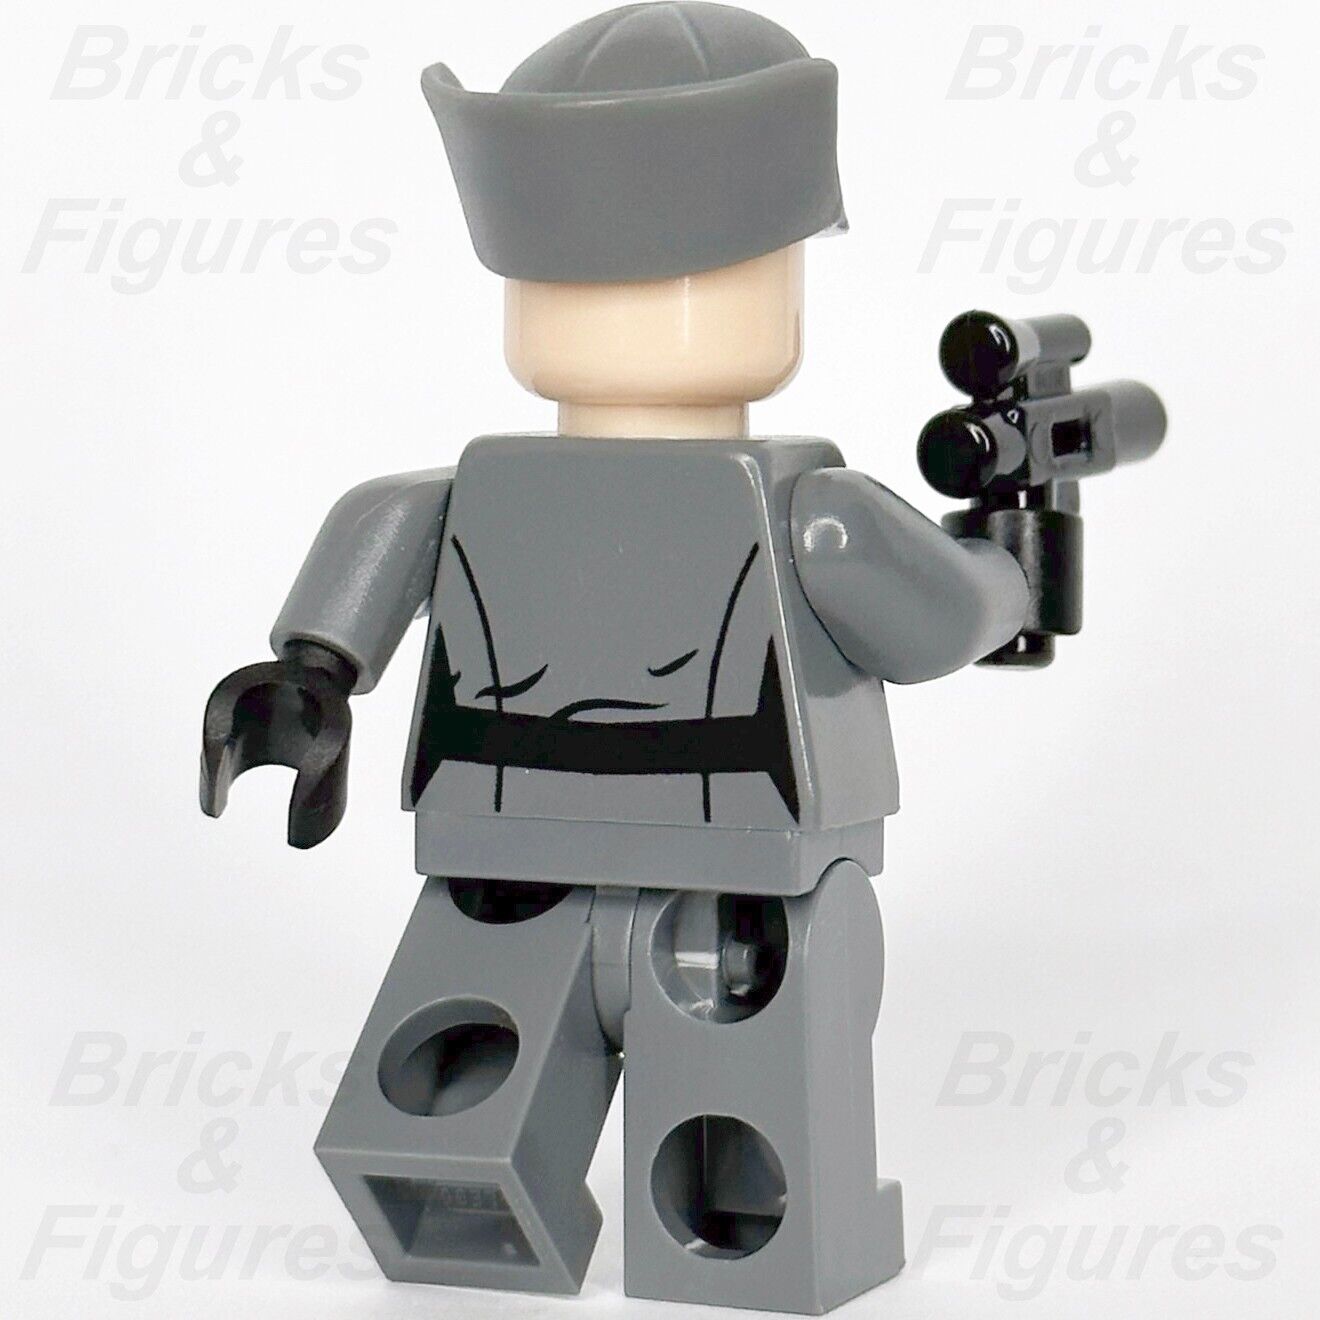 LEGO Star Wars First Order Officer Minifigure Female Lieutenant Captain 75104 - Bricks & Figures